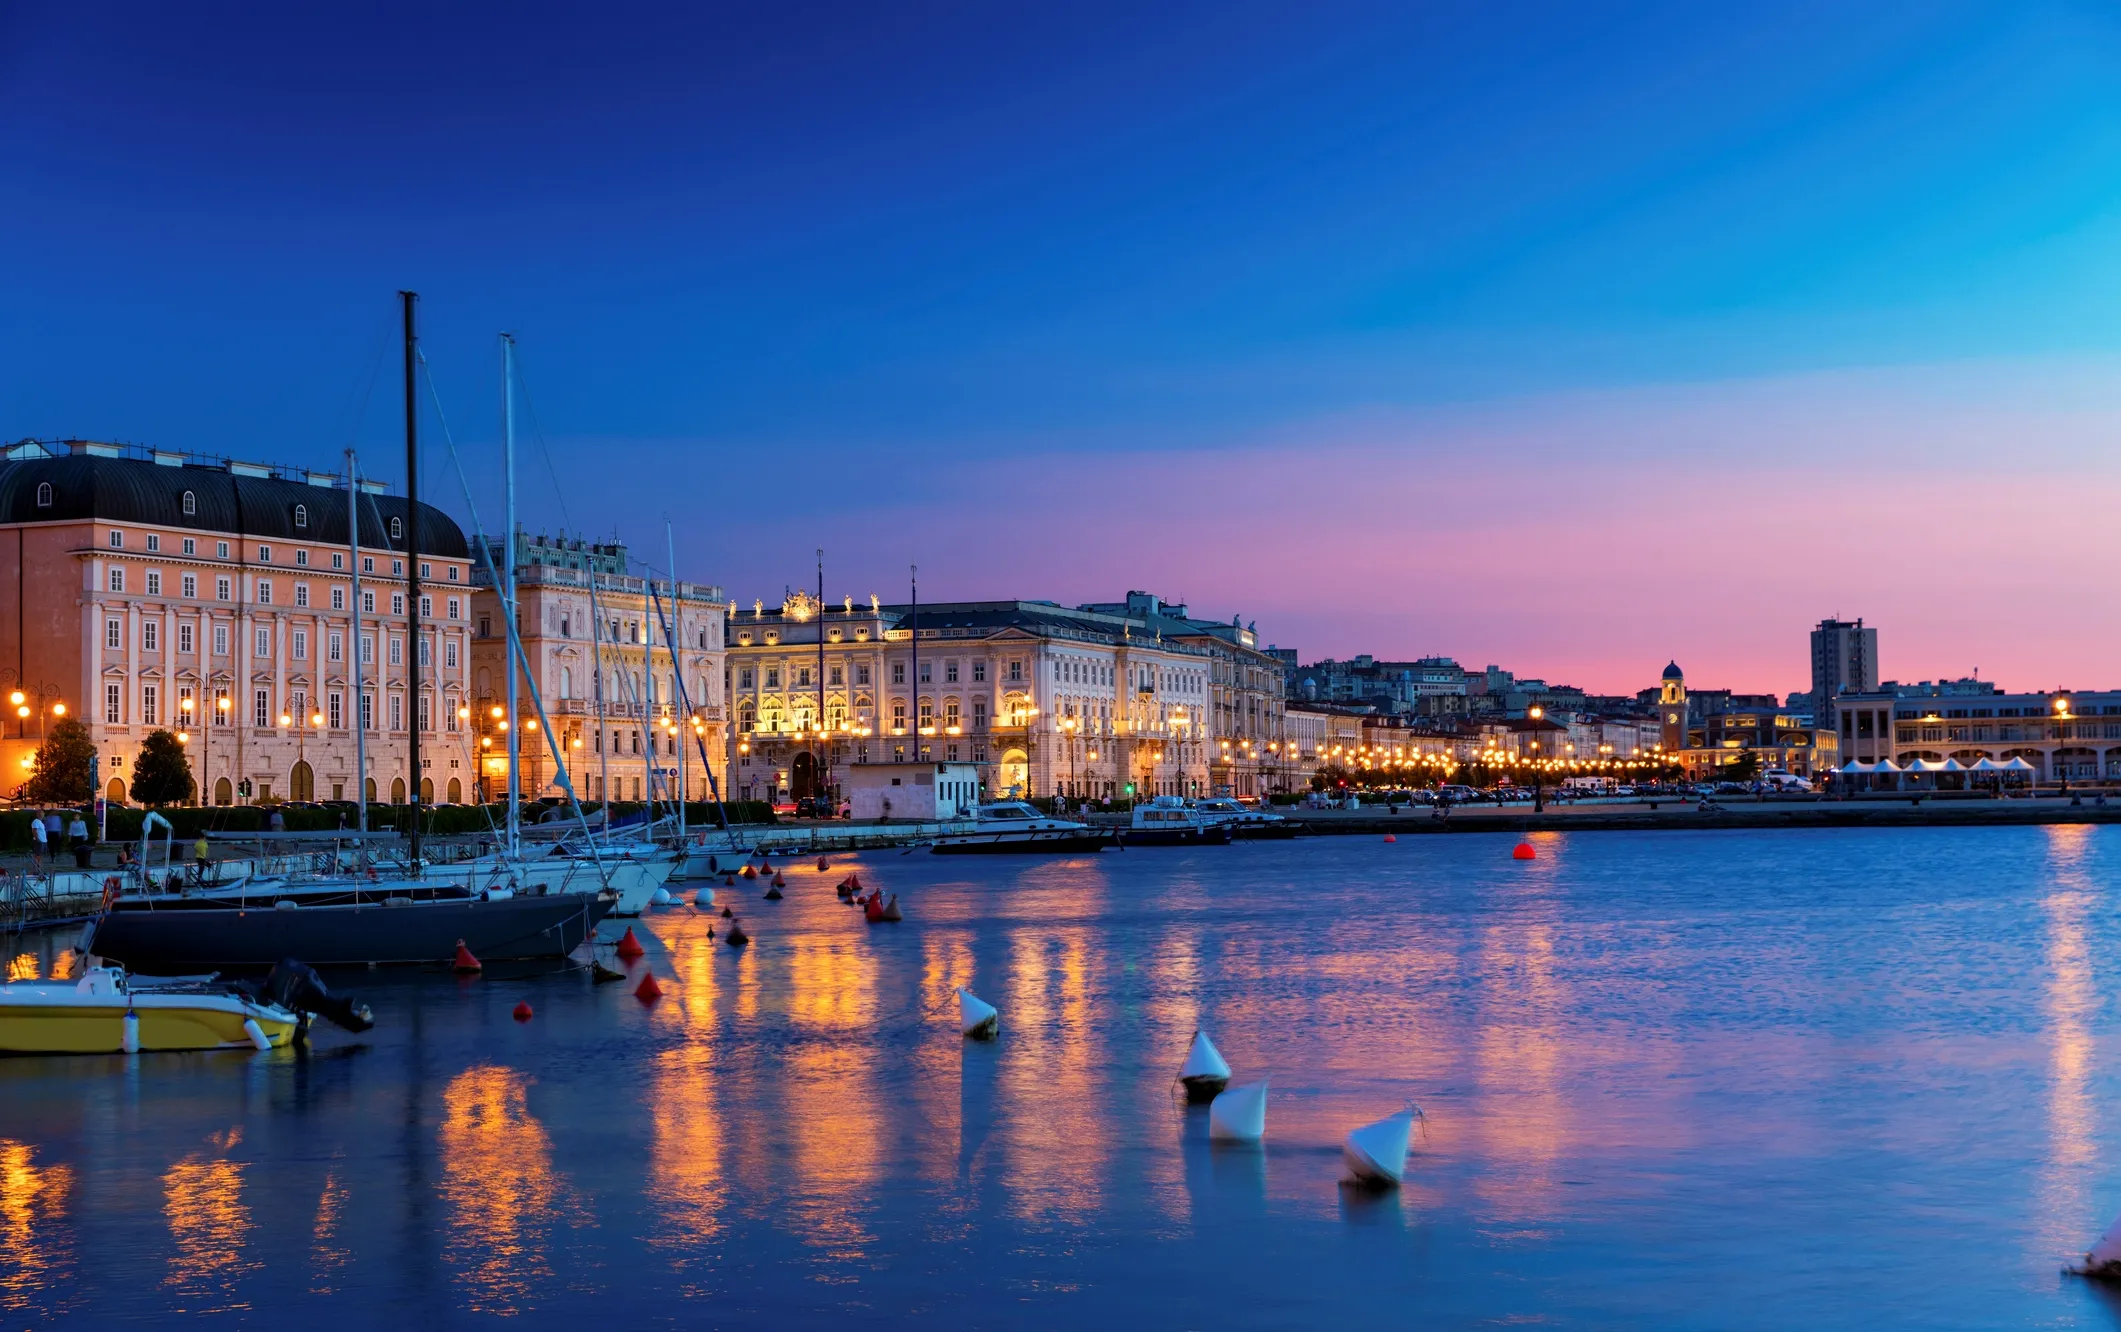 Le port de Trieste, Italie du Nord
© iStock/zstockphotos